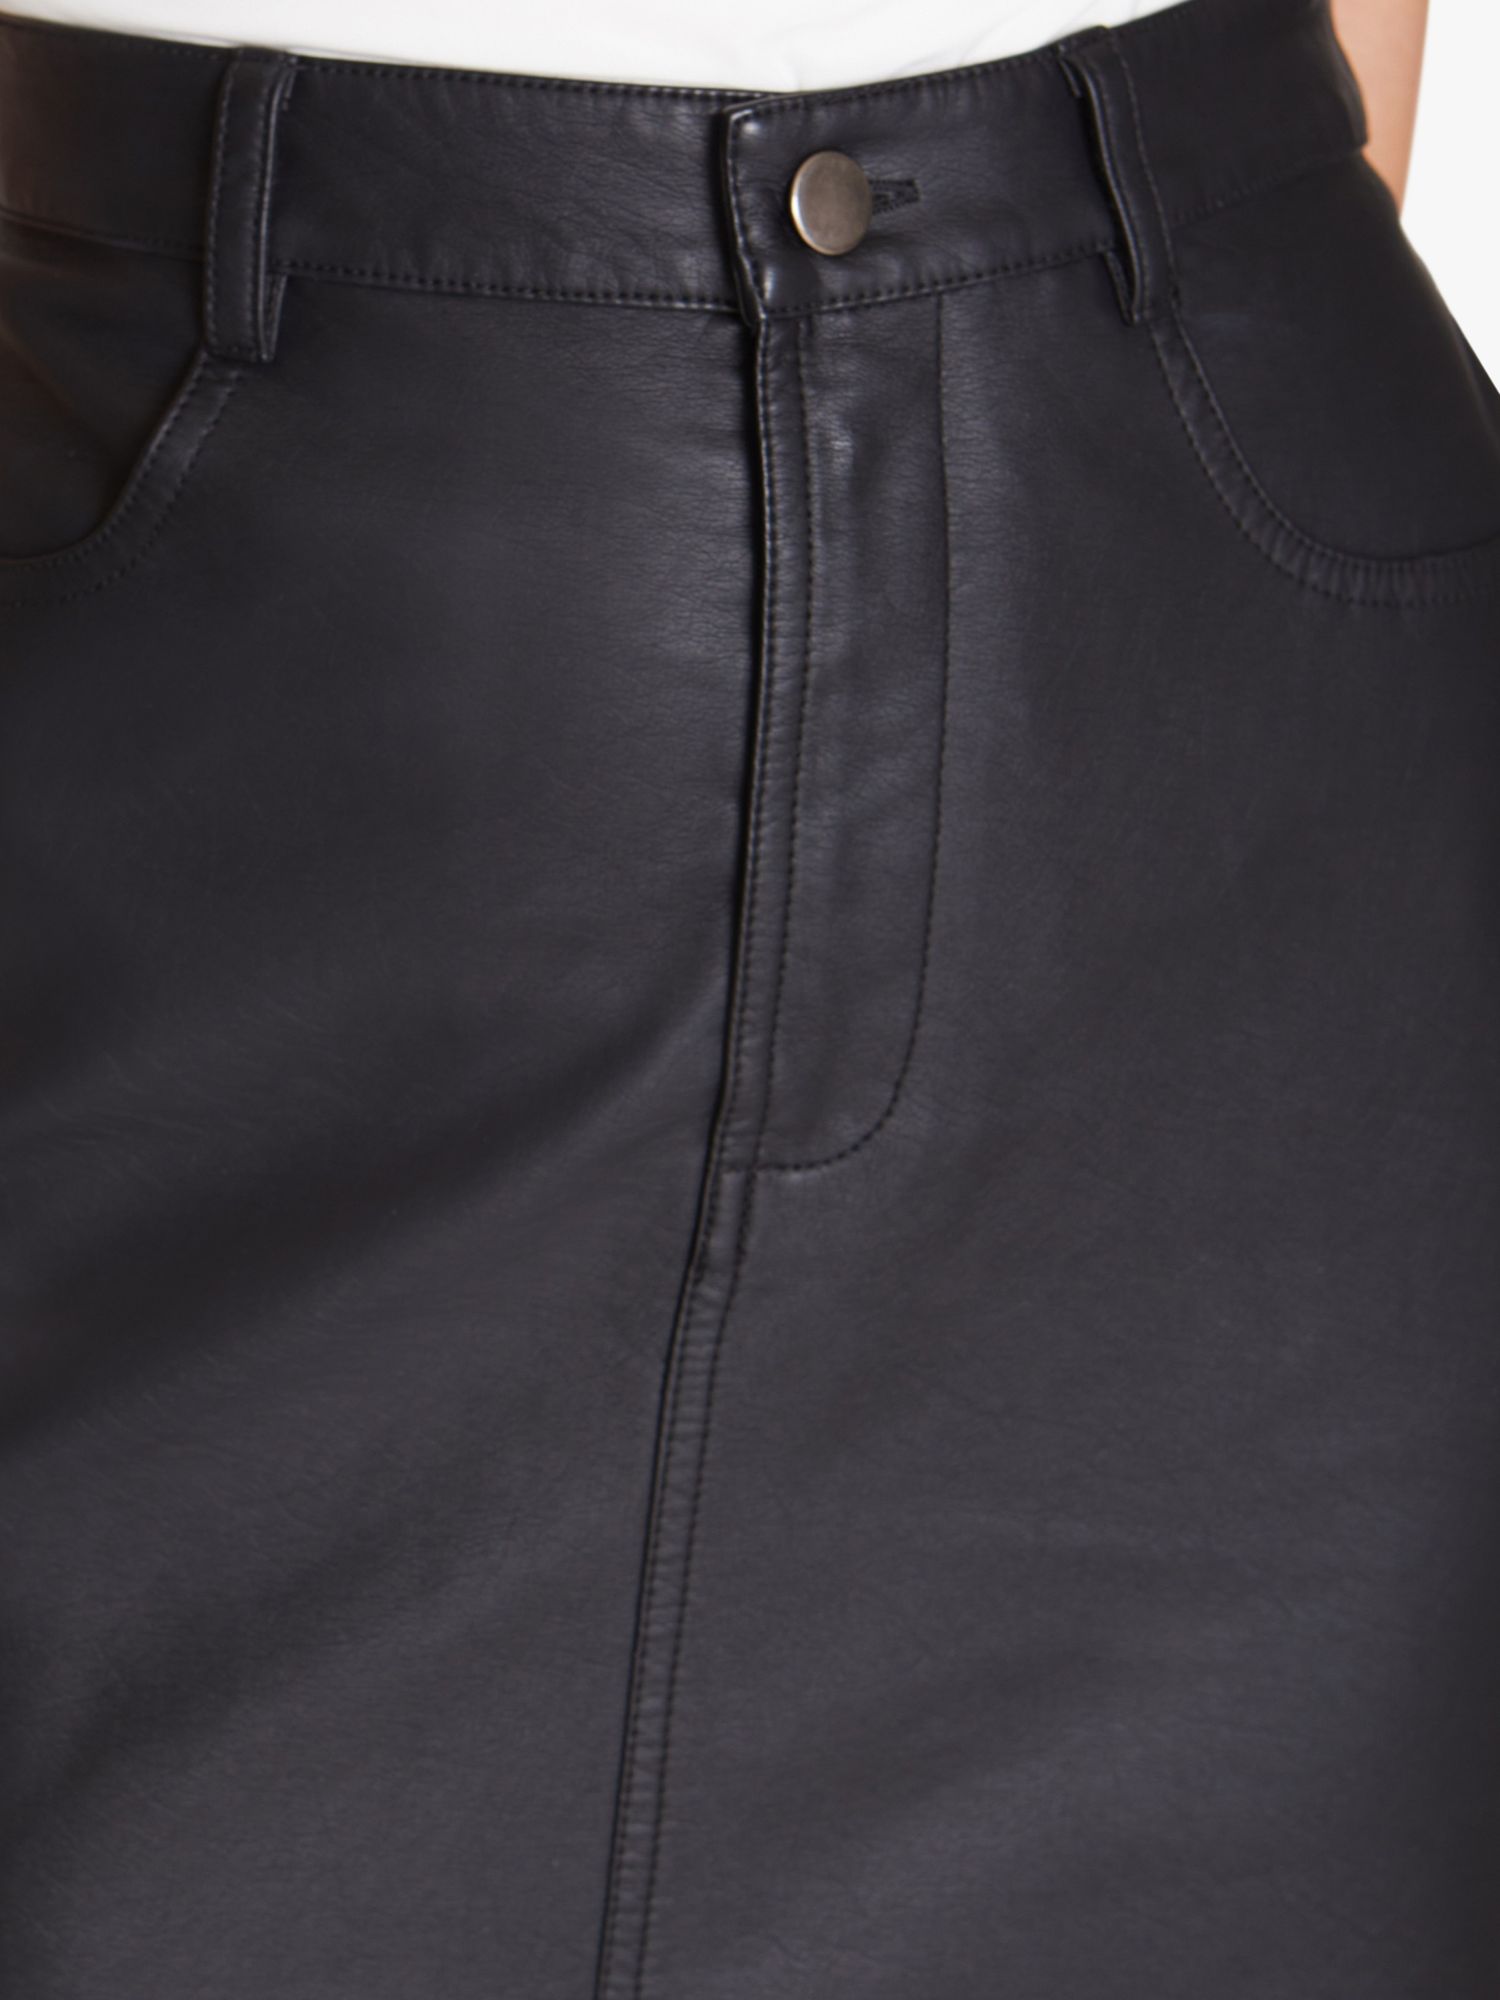 Buy Sisters Point Deia Leather Look Midi Skirt, Black Online at johnlewis.com